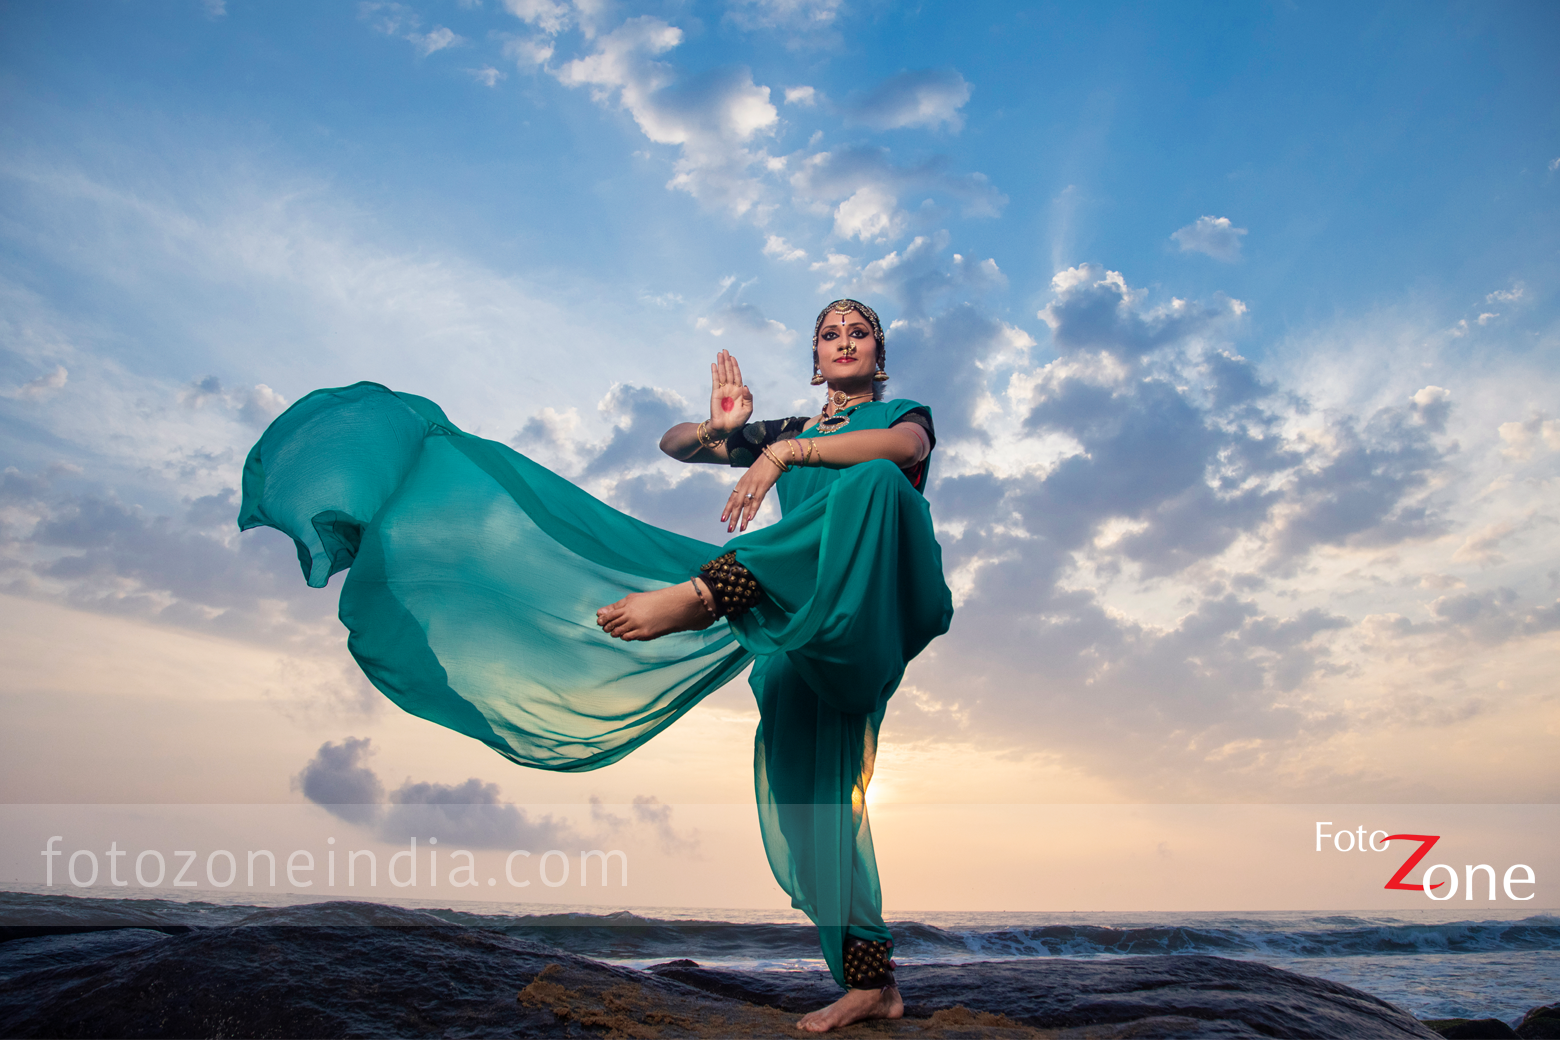 Photoshoot Ideas at the Beach | Bidun Art